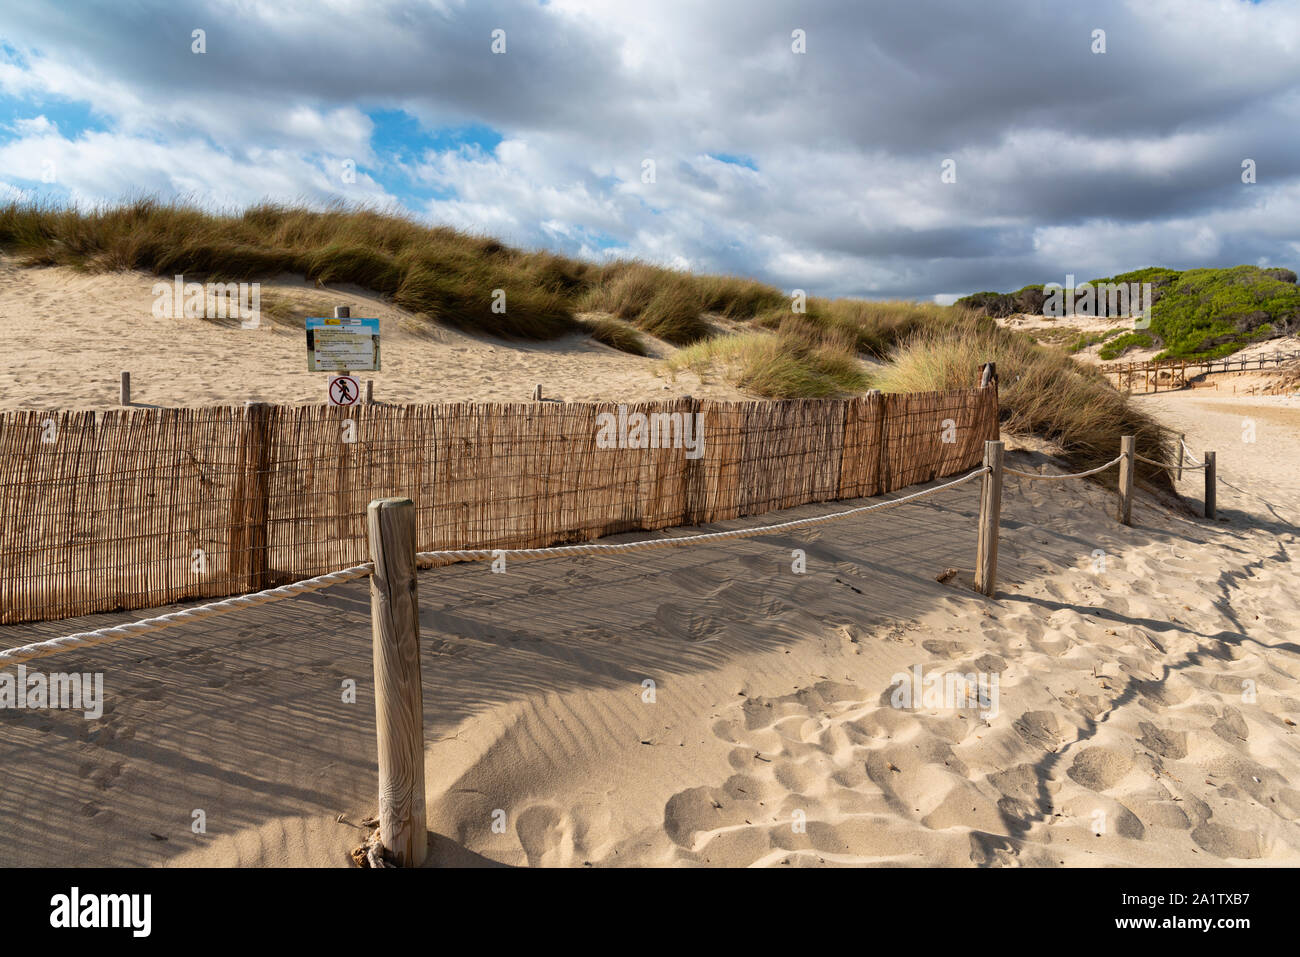 Mallorca, Spain, August 16 2019: sign prohibiting access to the regeneration sand dune reserve, Cala Mesquida beach Majorca Spain Stock Photo